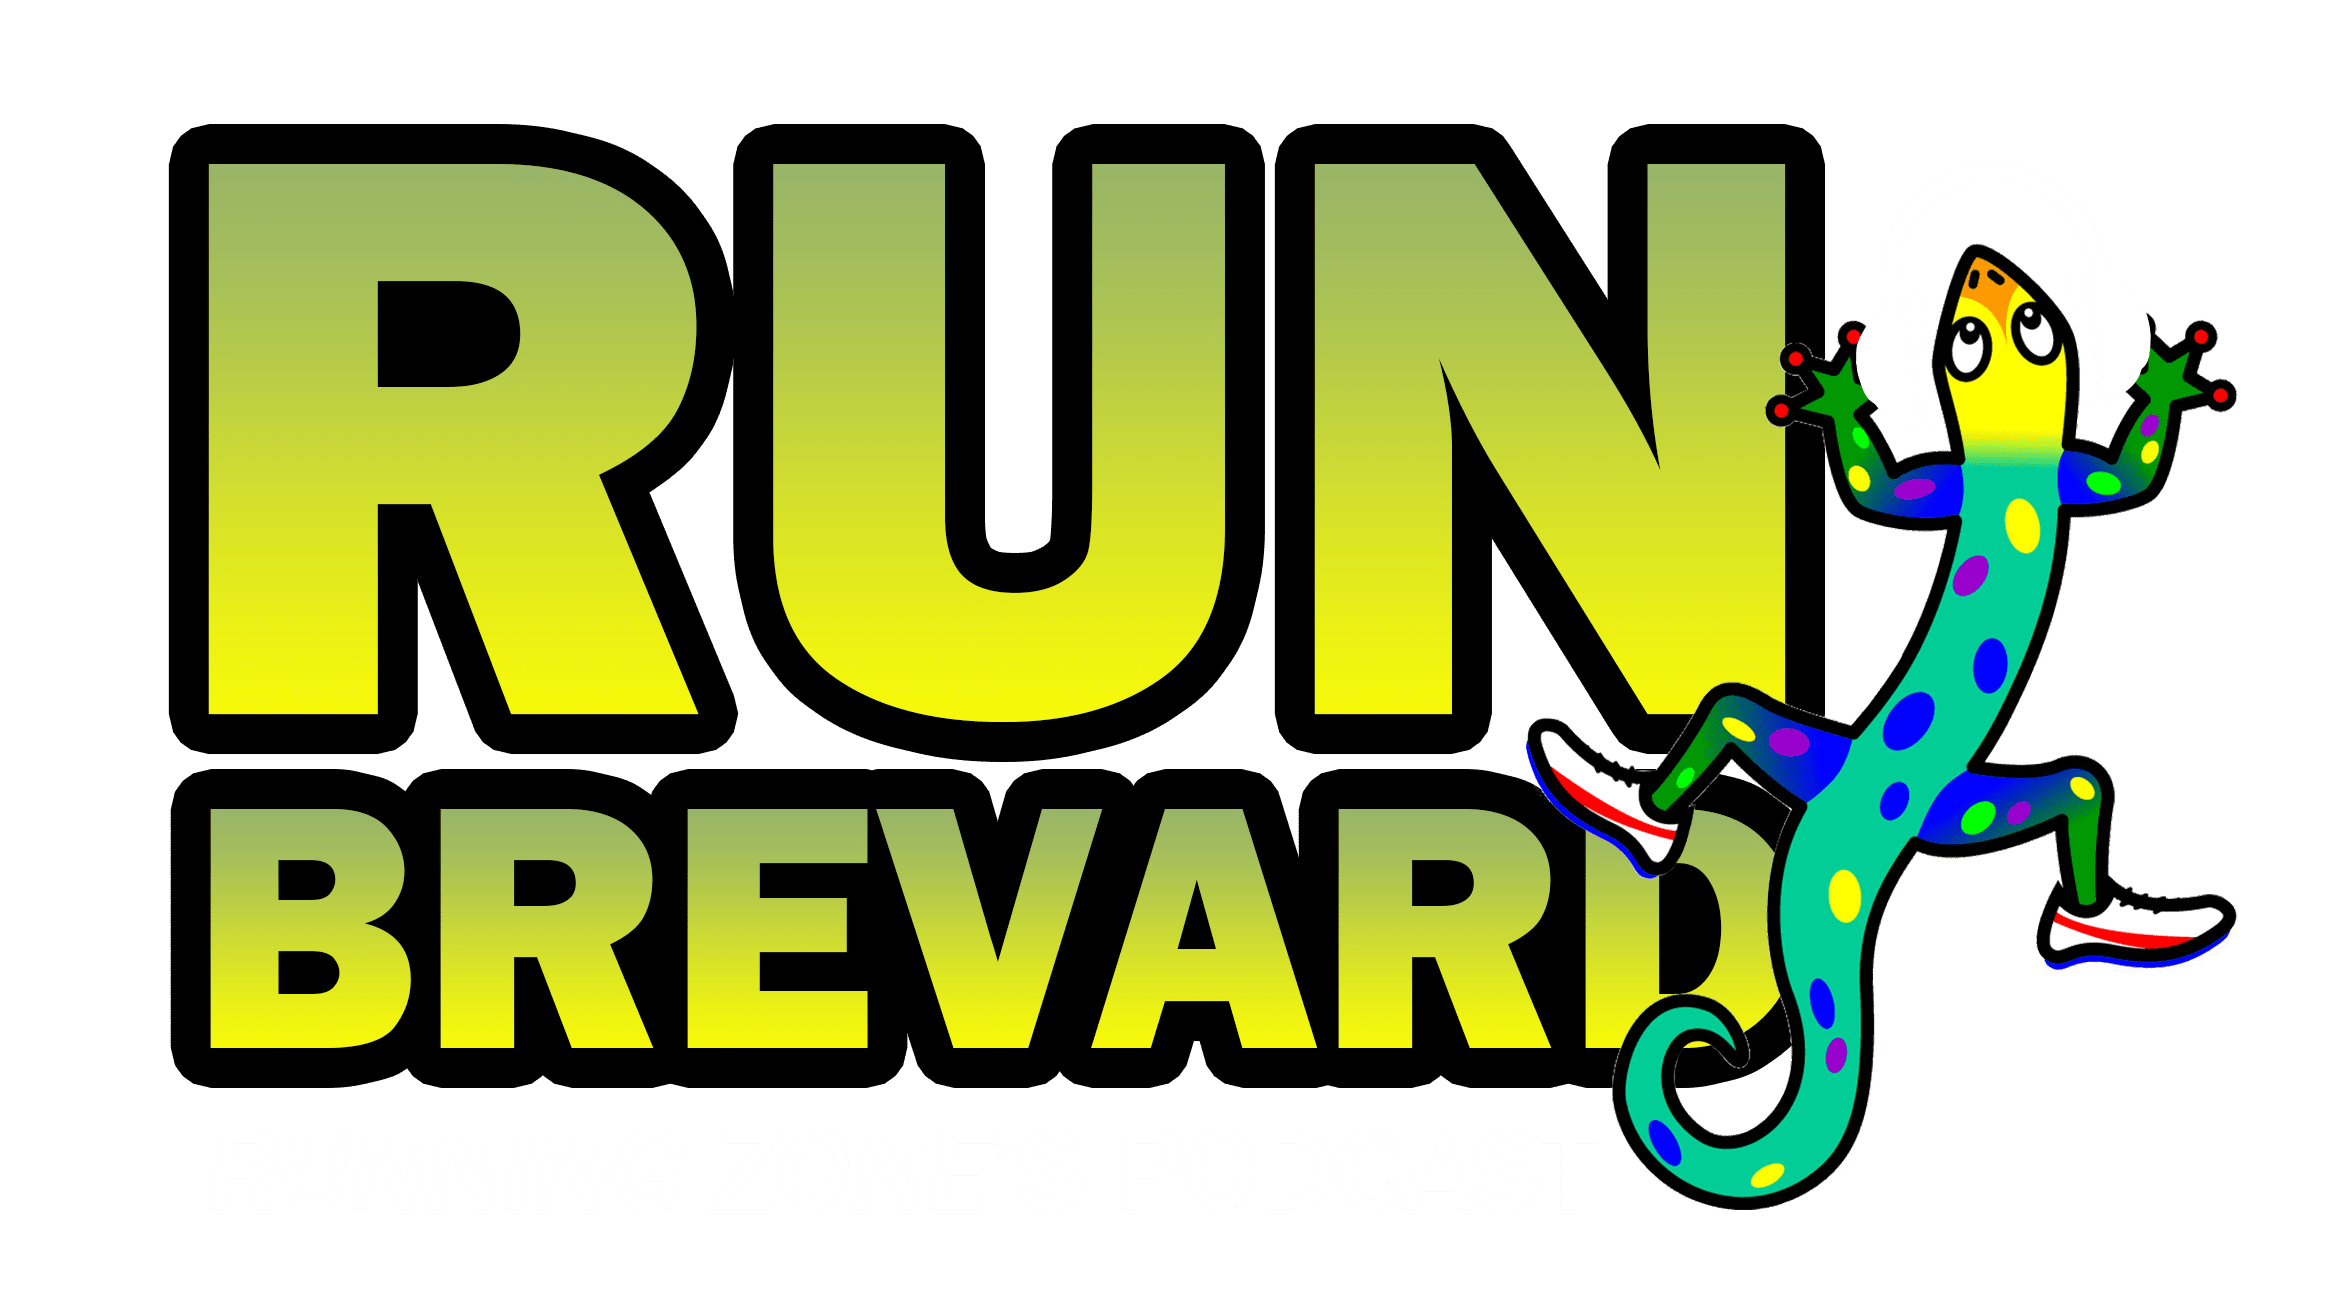 Run Brevard podcast logo